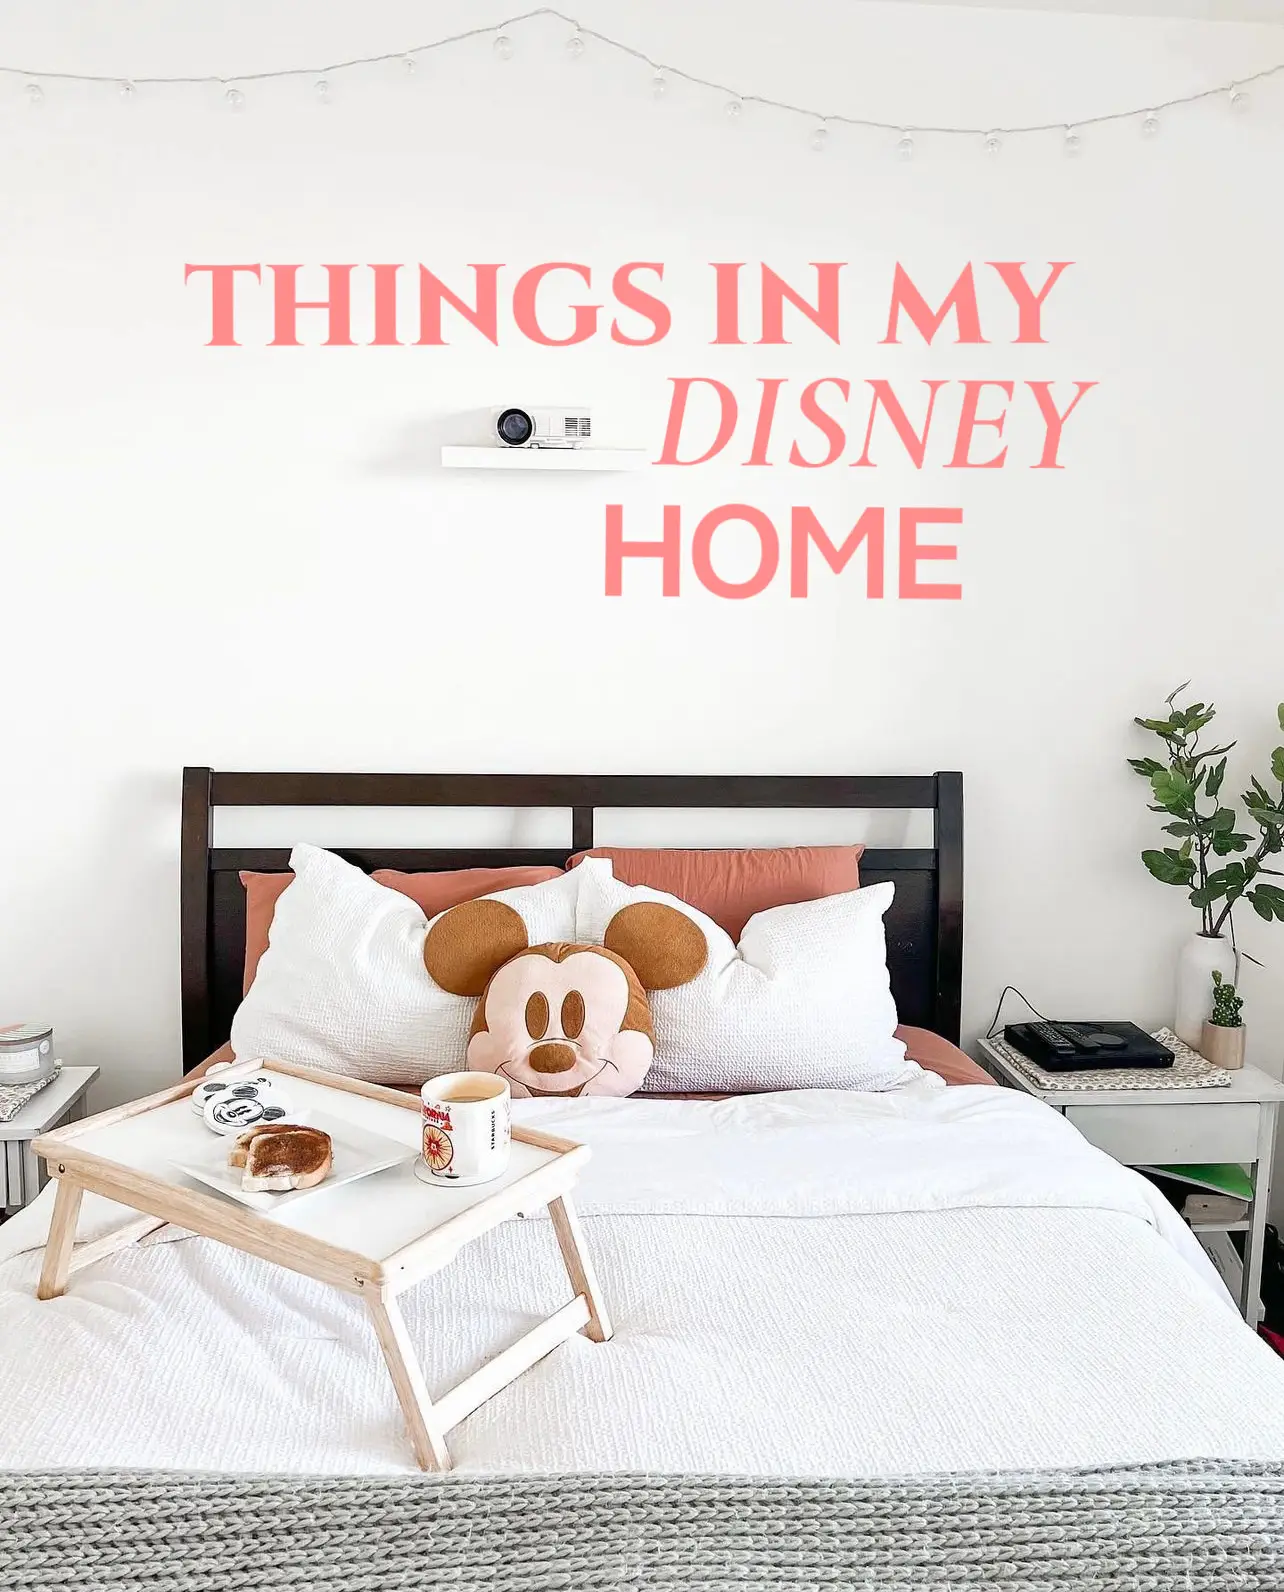 490 Disney Household Items ideas  disney decor, disney home decor, disney  home